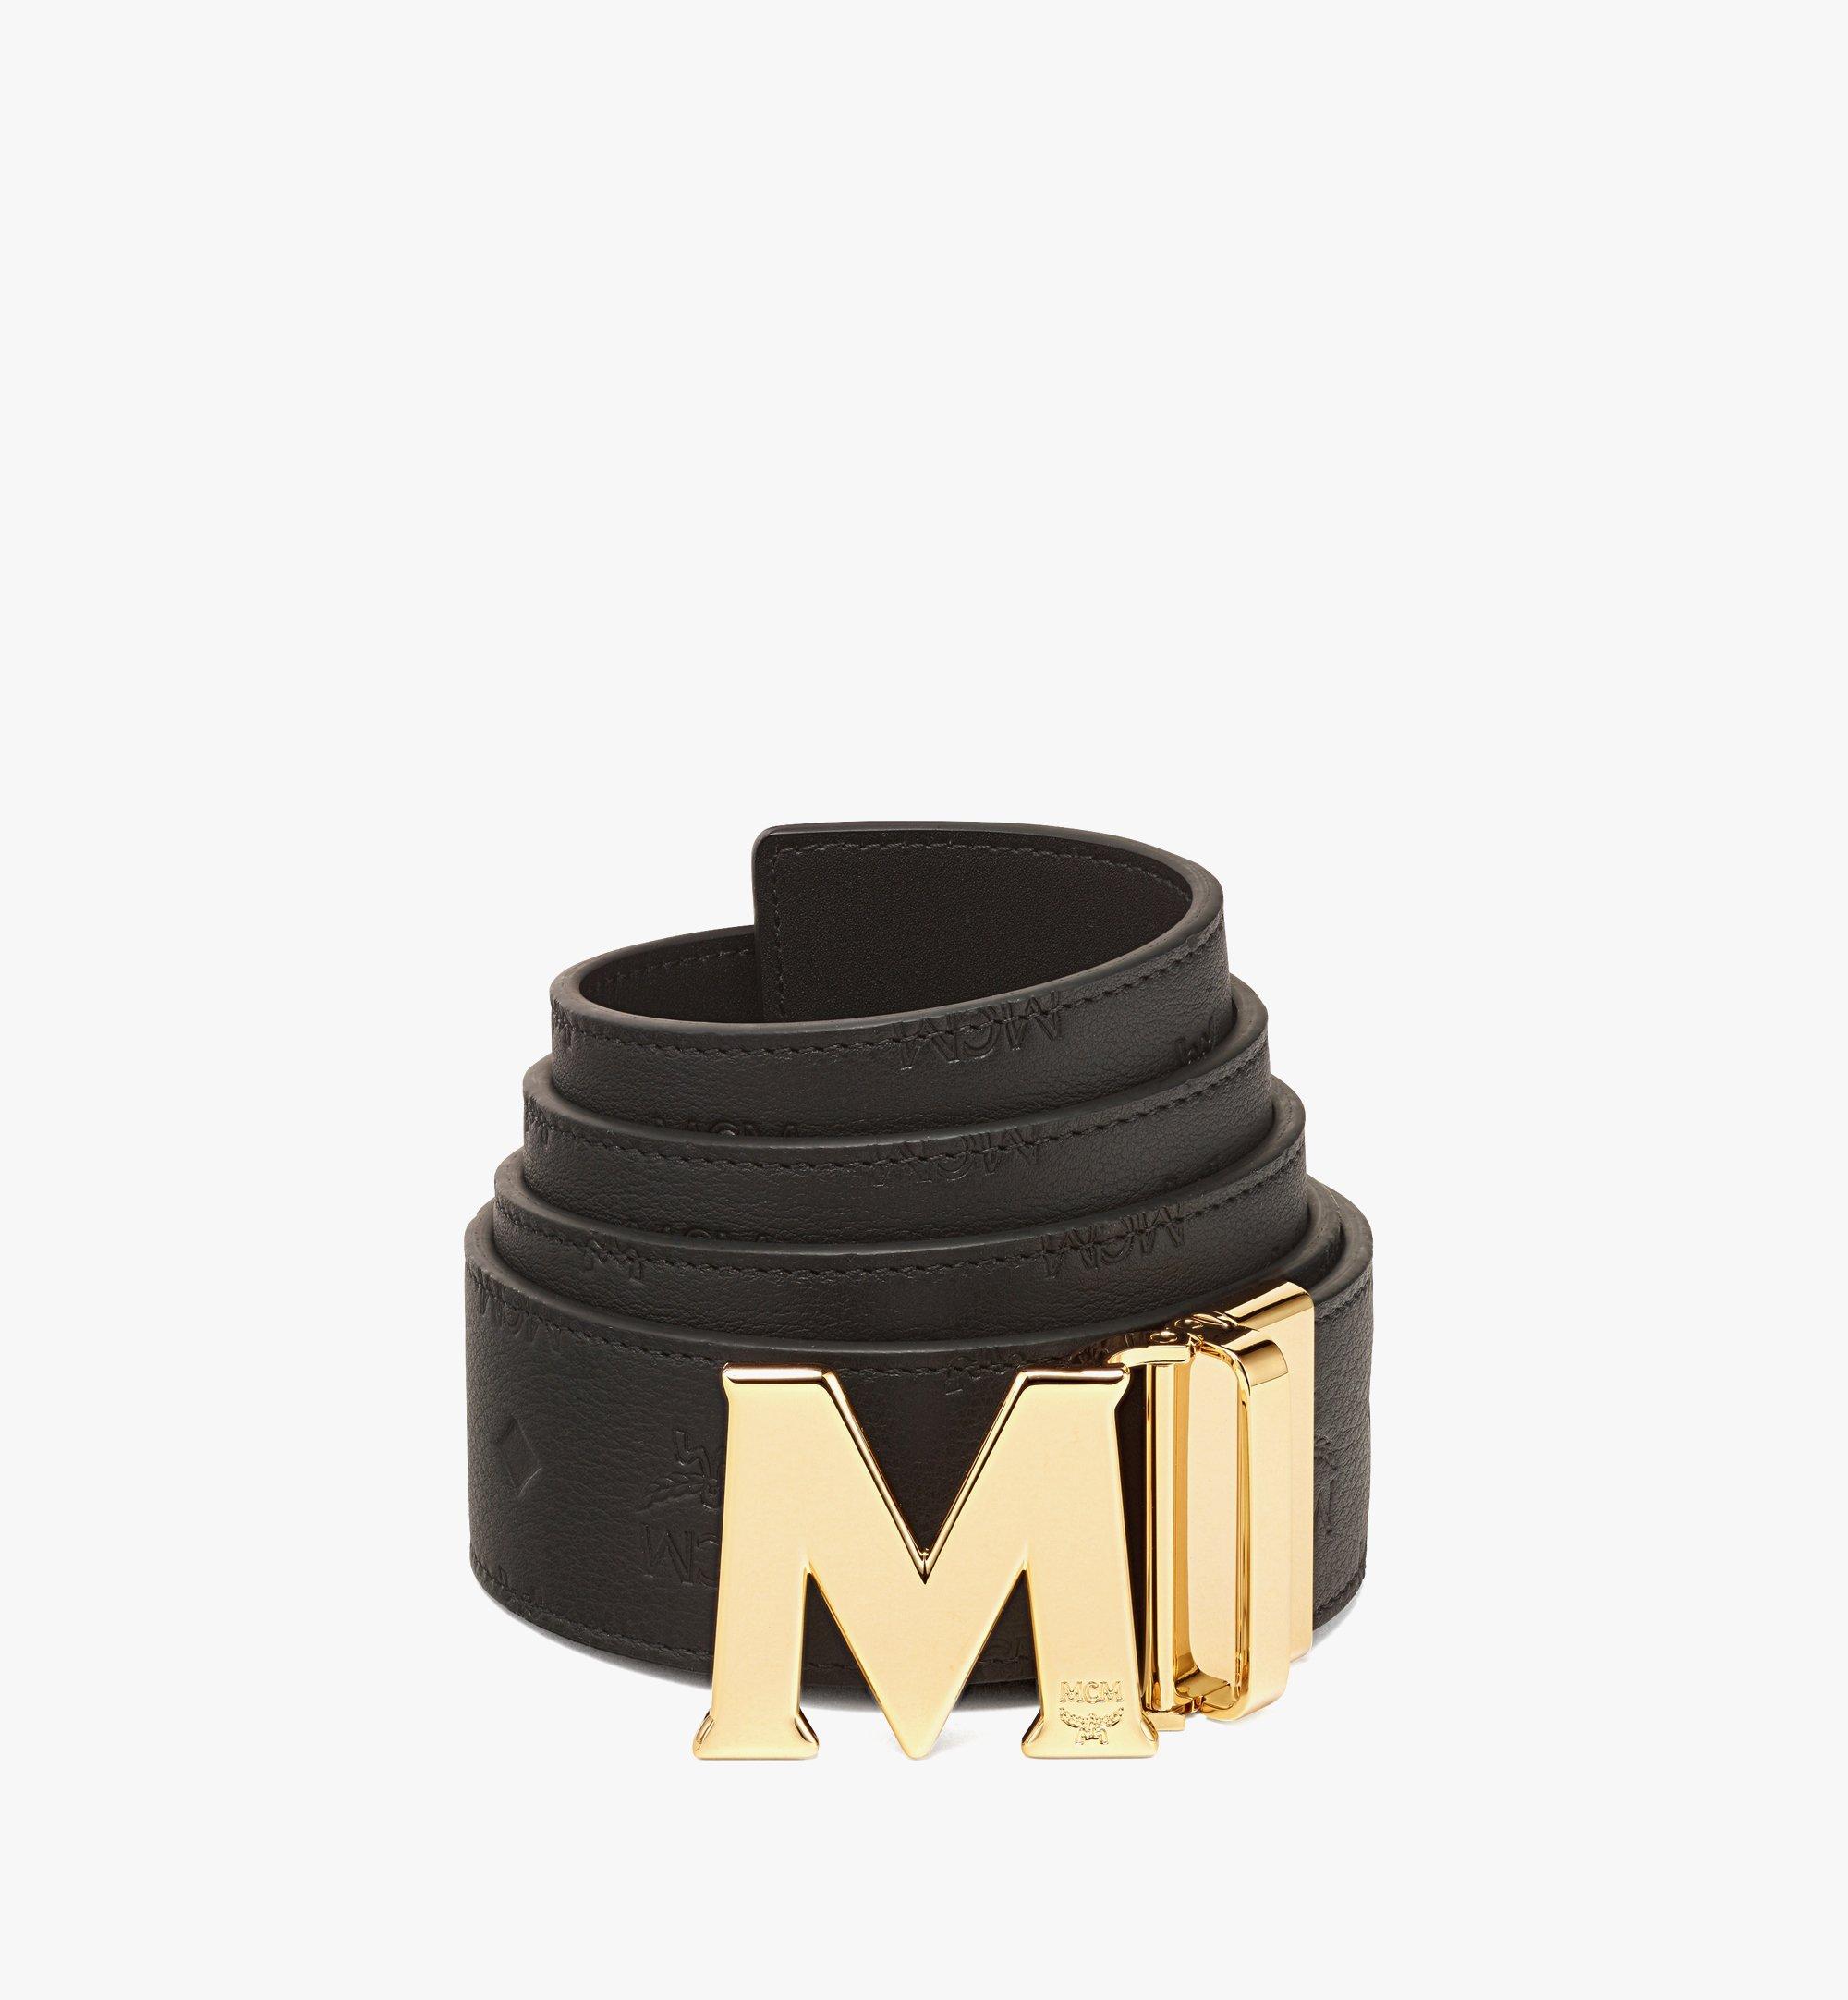 MCM Belt - Blue Belts, Accessories - W3041036